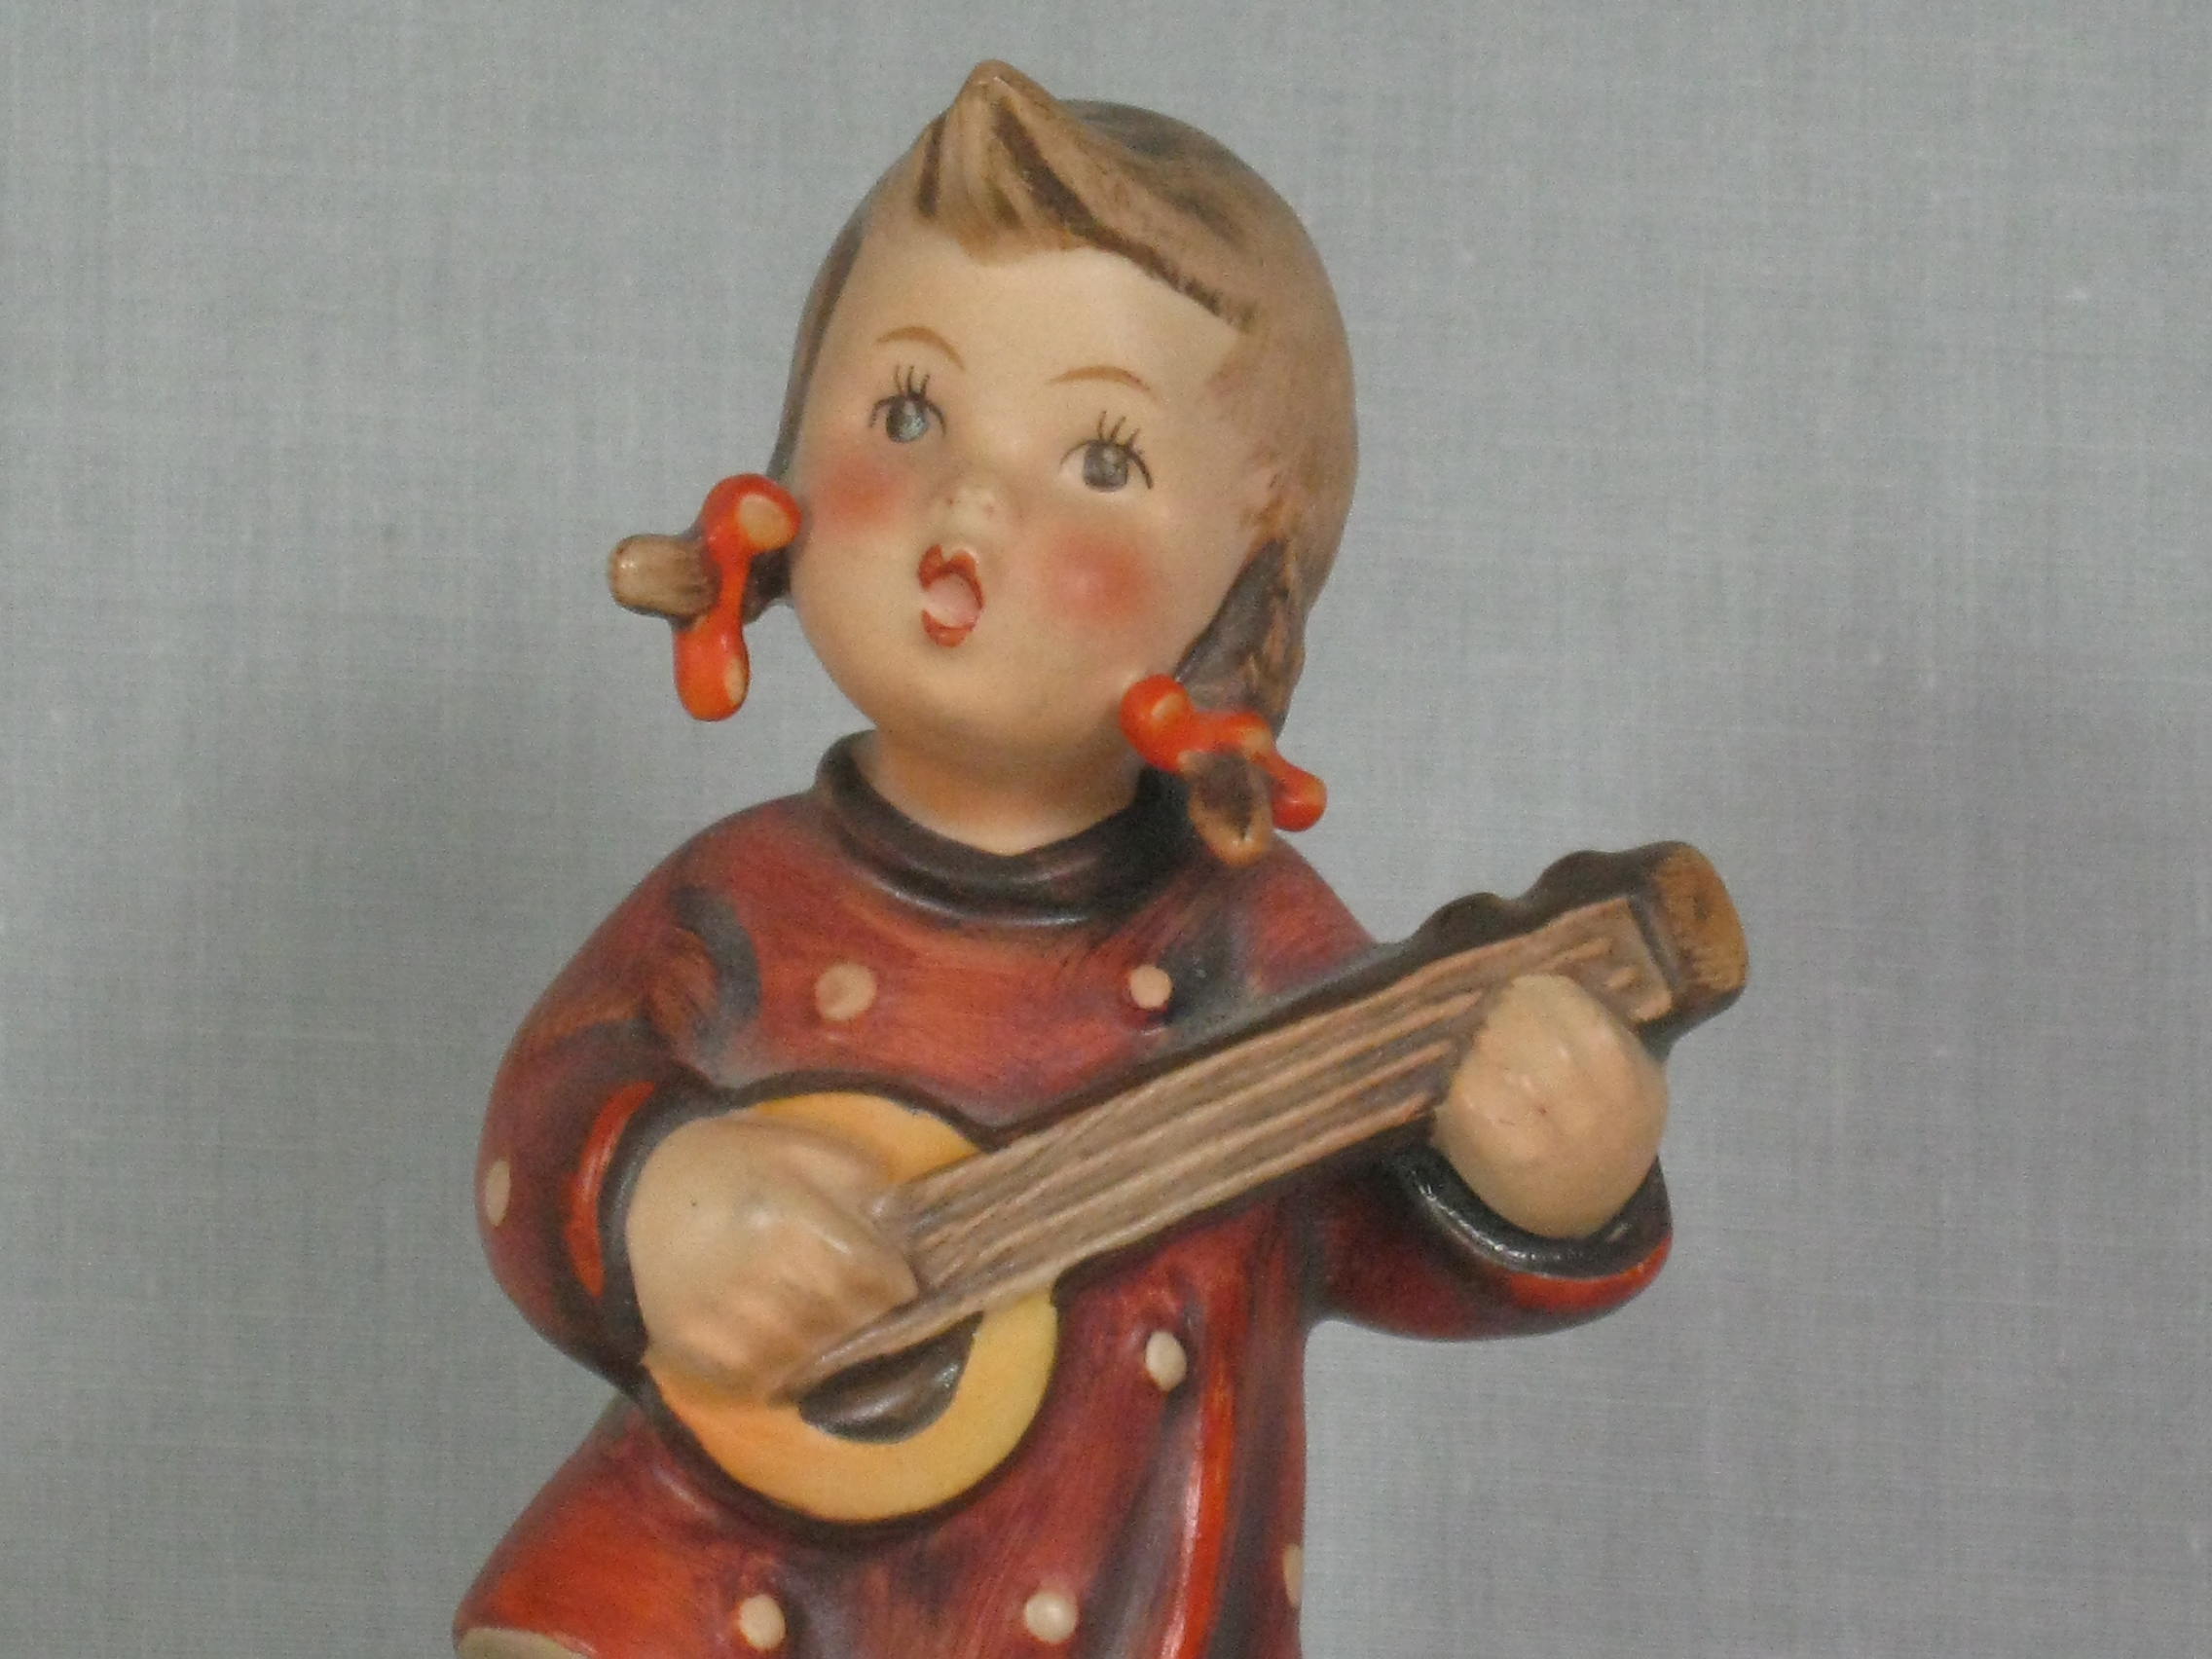 Vintage Hummel Figurine Happiness 86 TMK-2 Girl With Banjo Full Bee Mark Germany 1